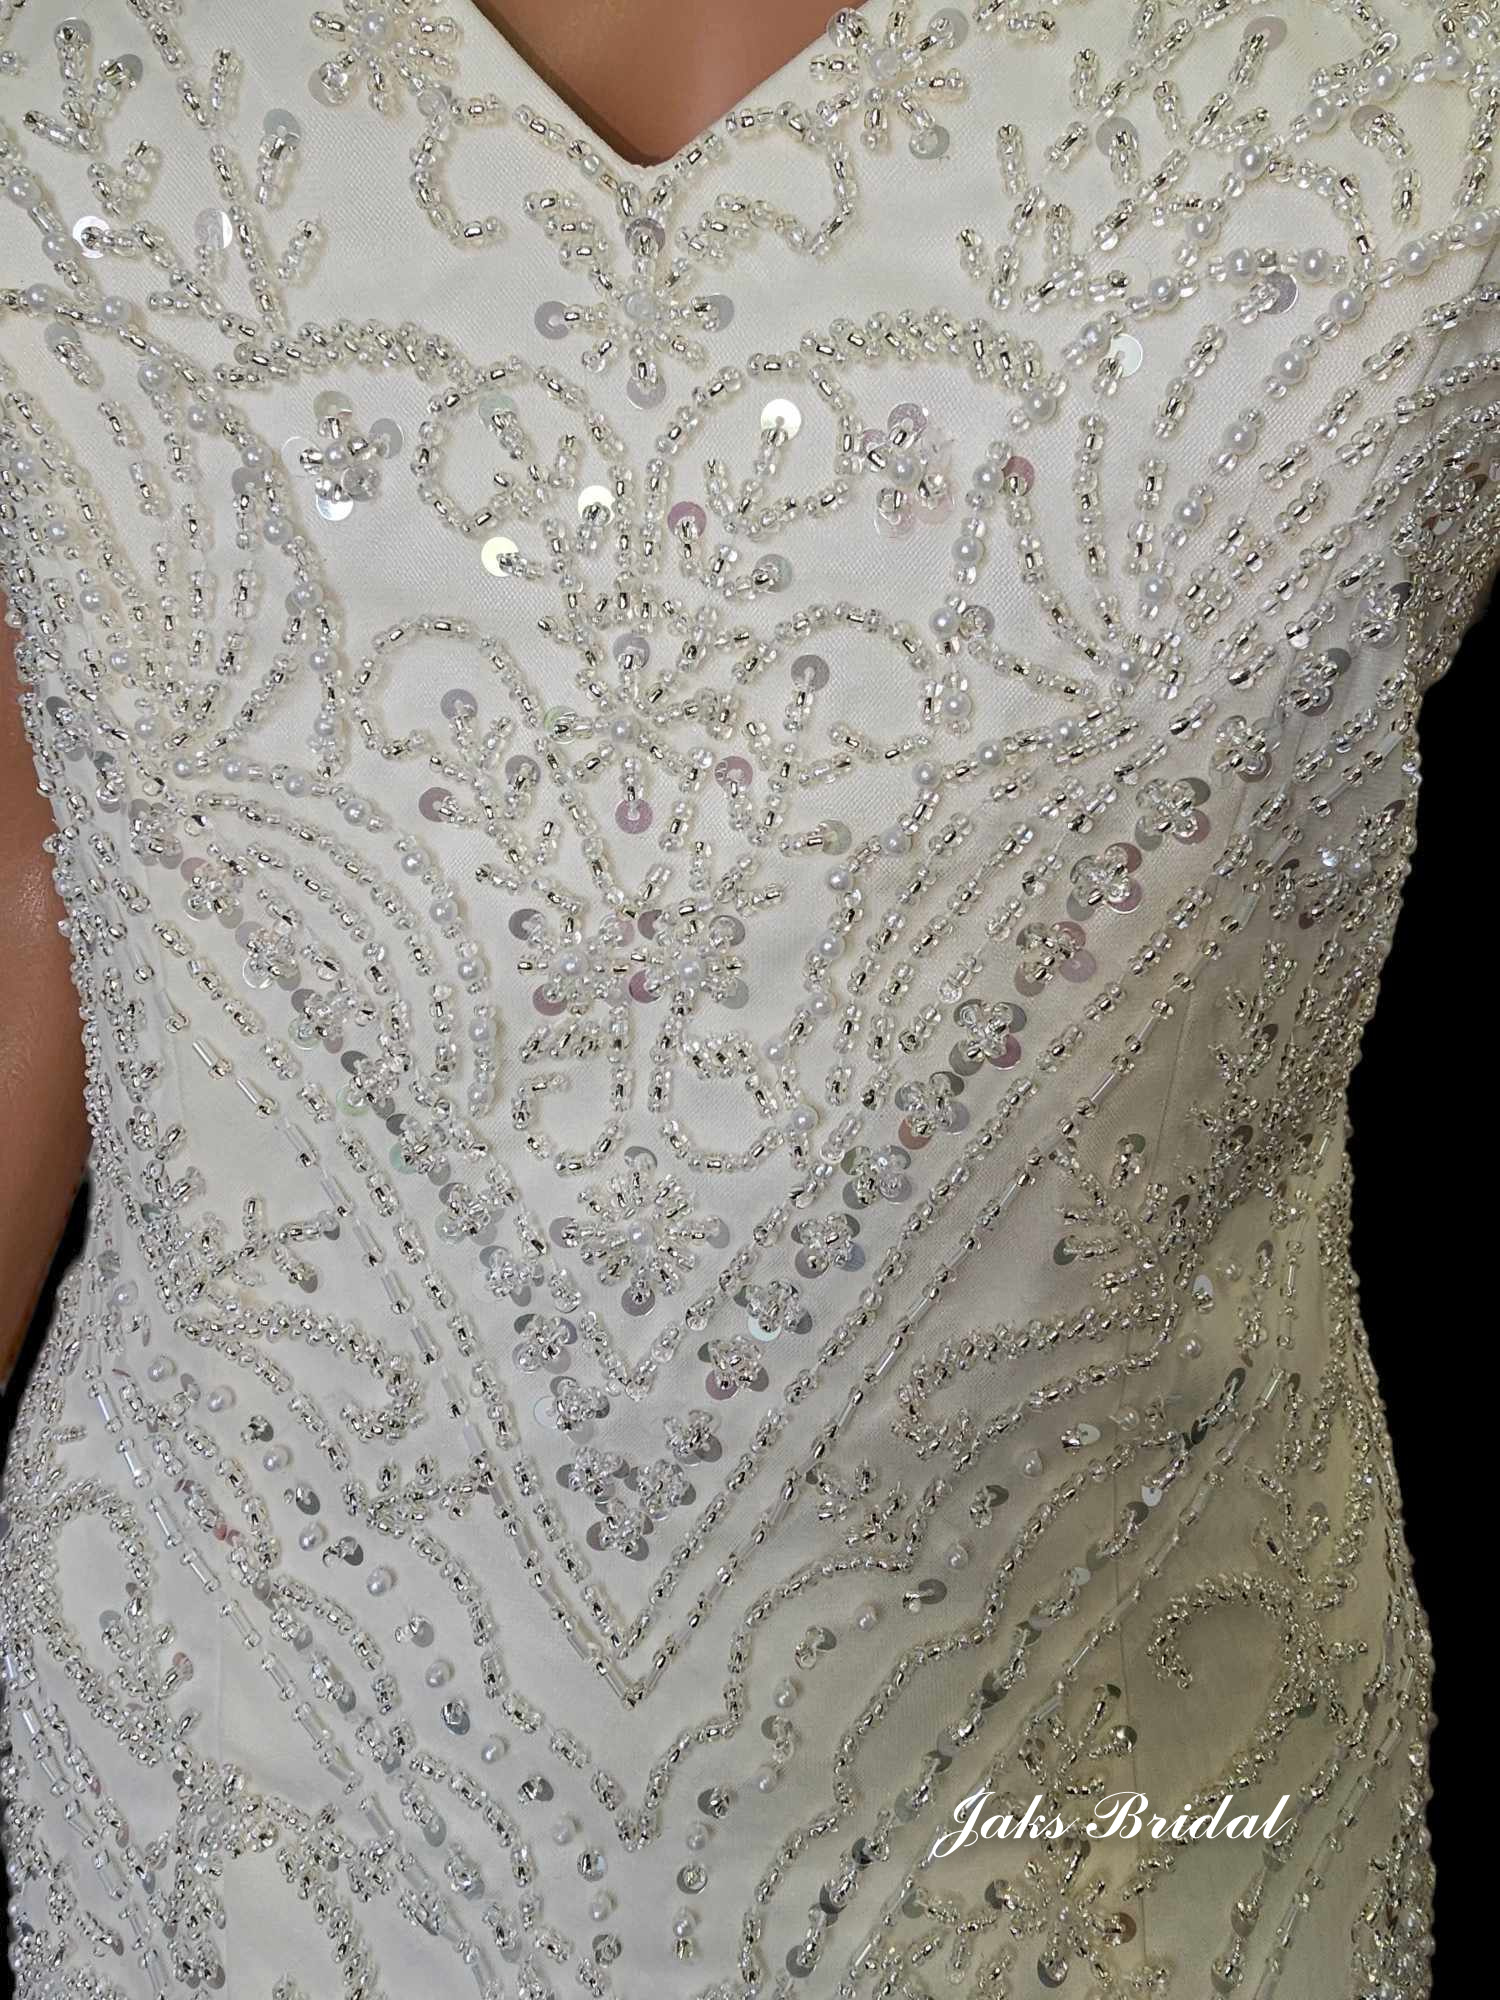 Bead embroidered junior bride dress